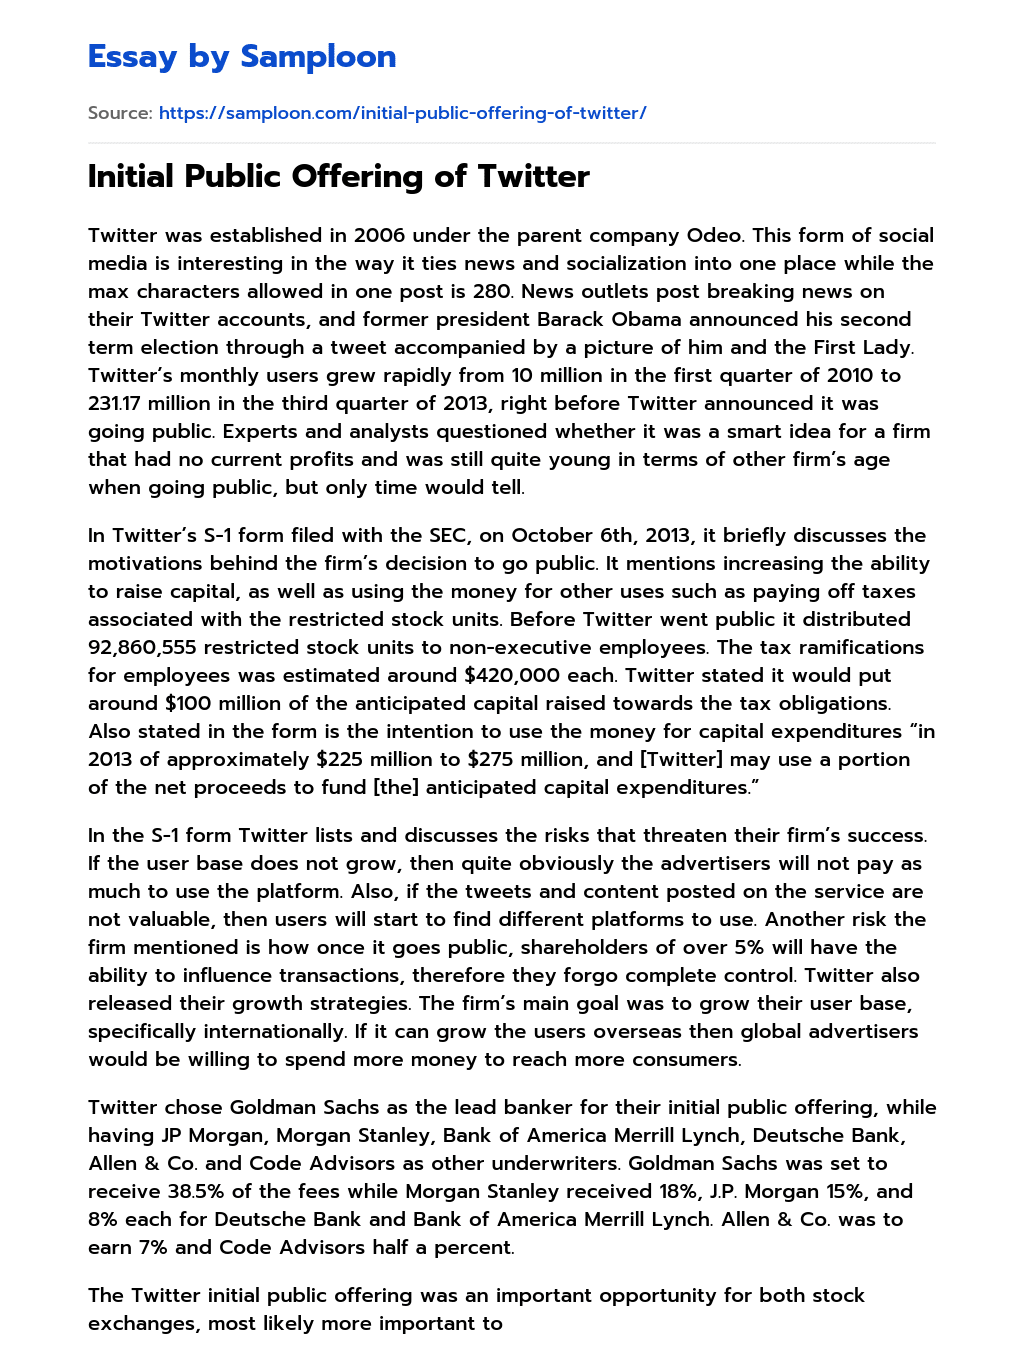 Initial Public Offering of Twitter essay